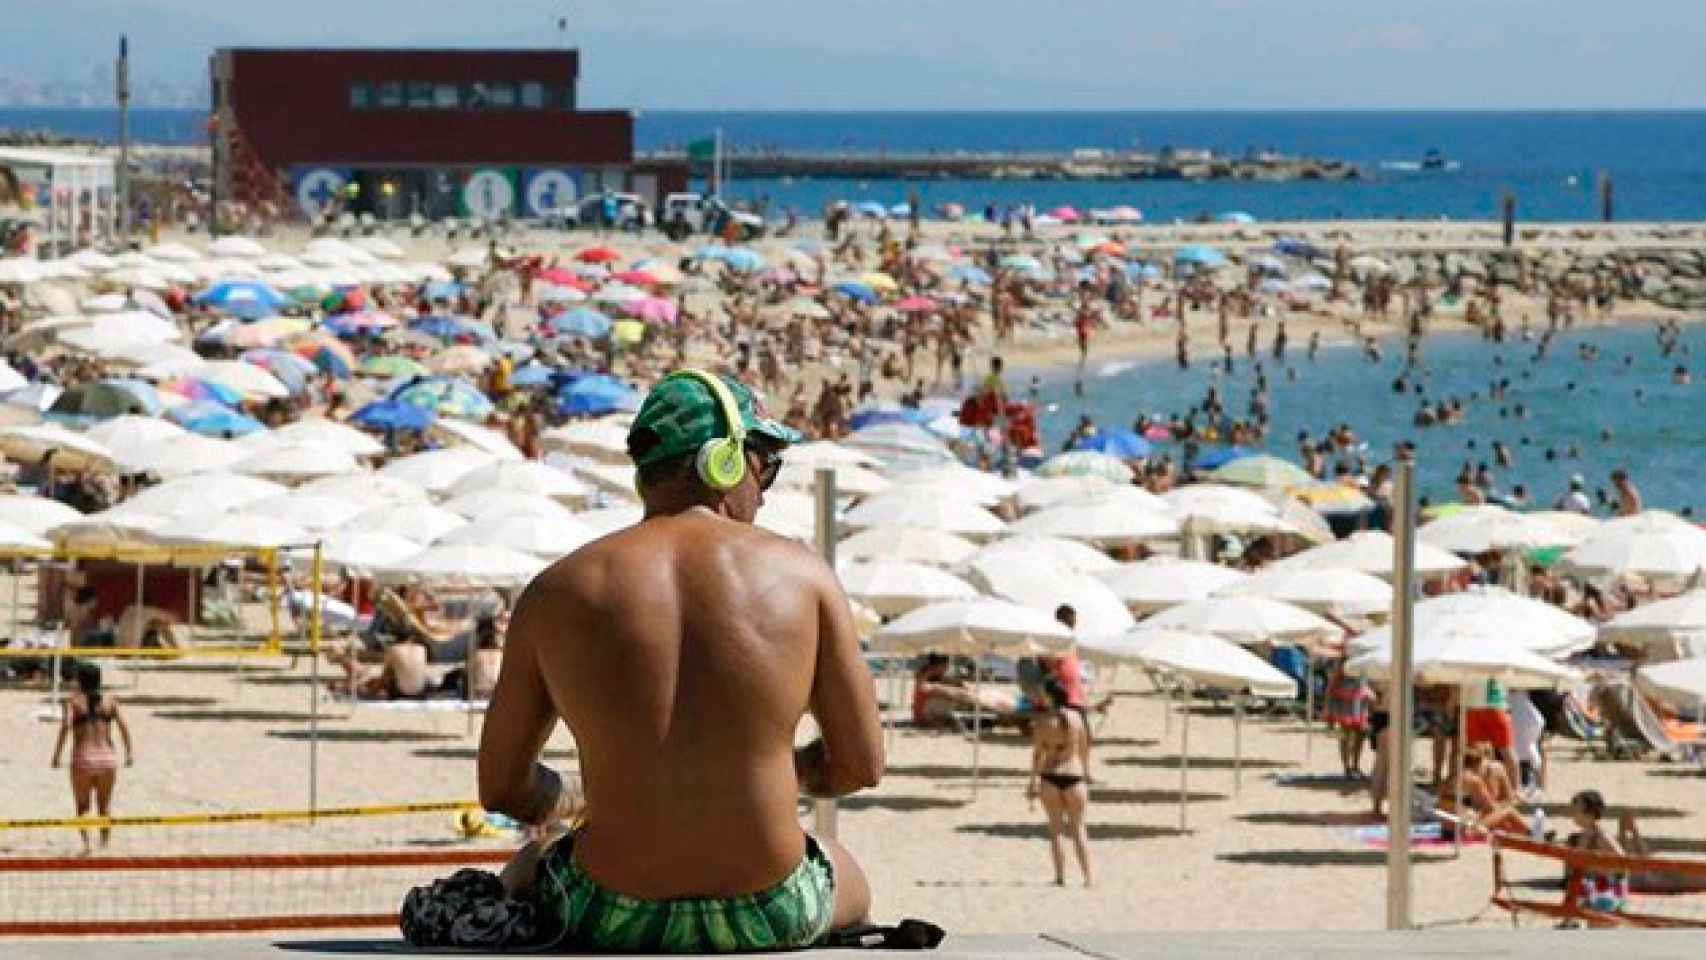 Imagen de la playa de Nova Icària de Barcelona abarrotada de turistas / EFE